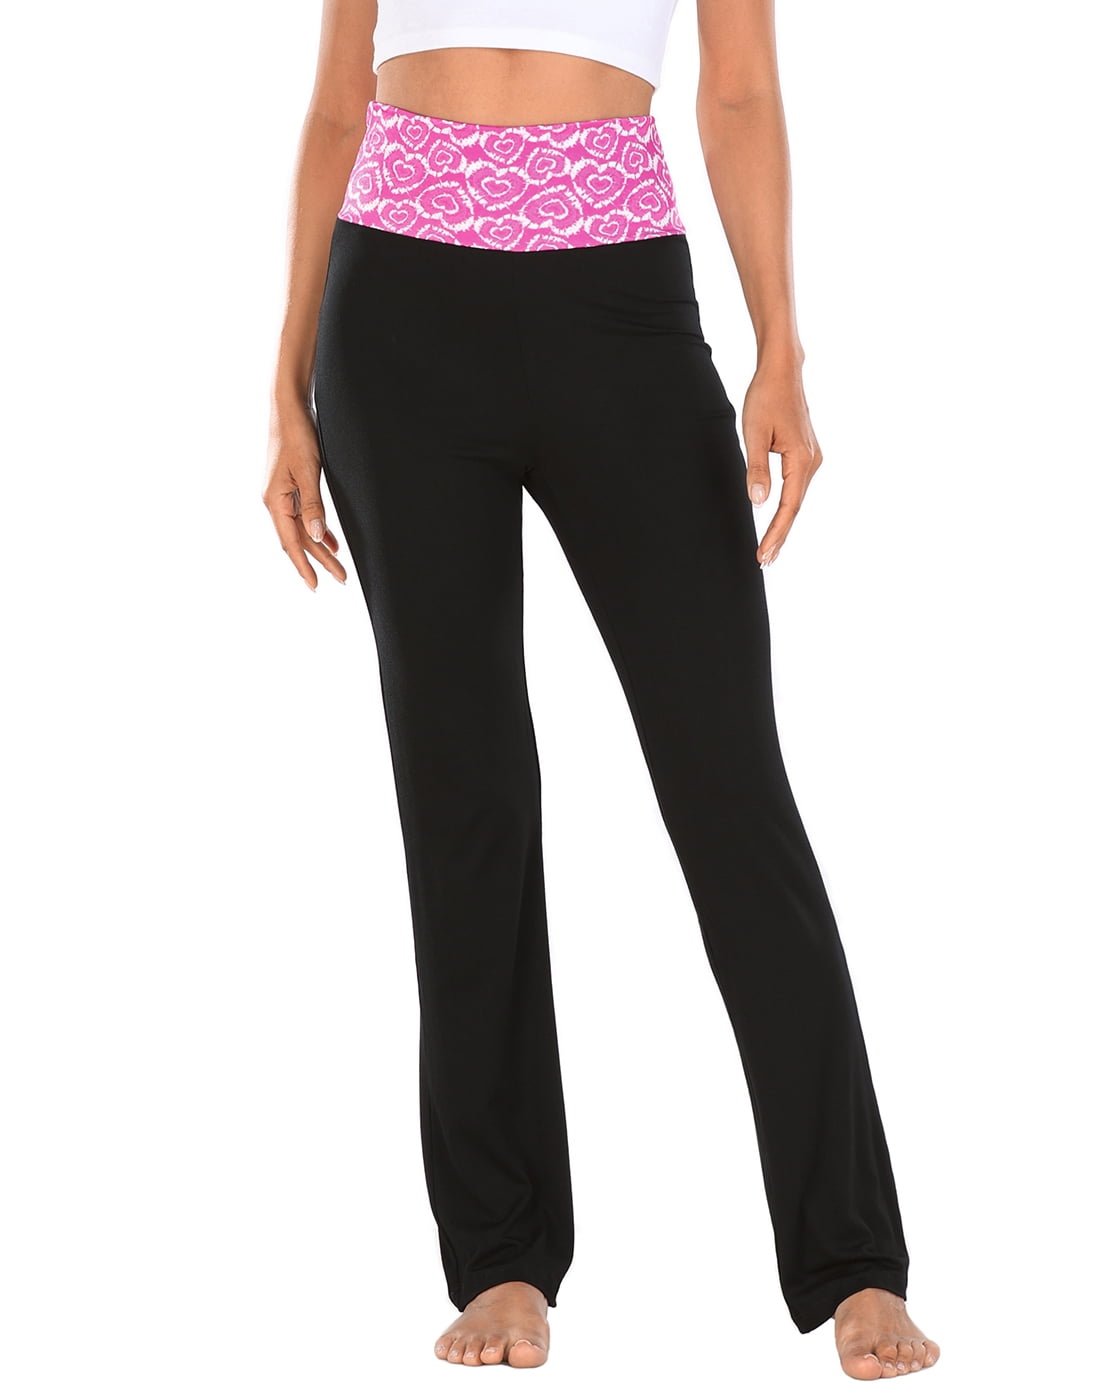 12pcs] HIgh rise flare yoga pants - black – Pink Vanilla